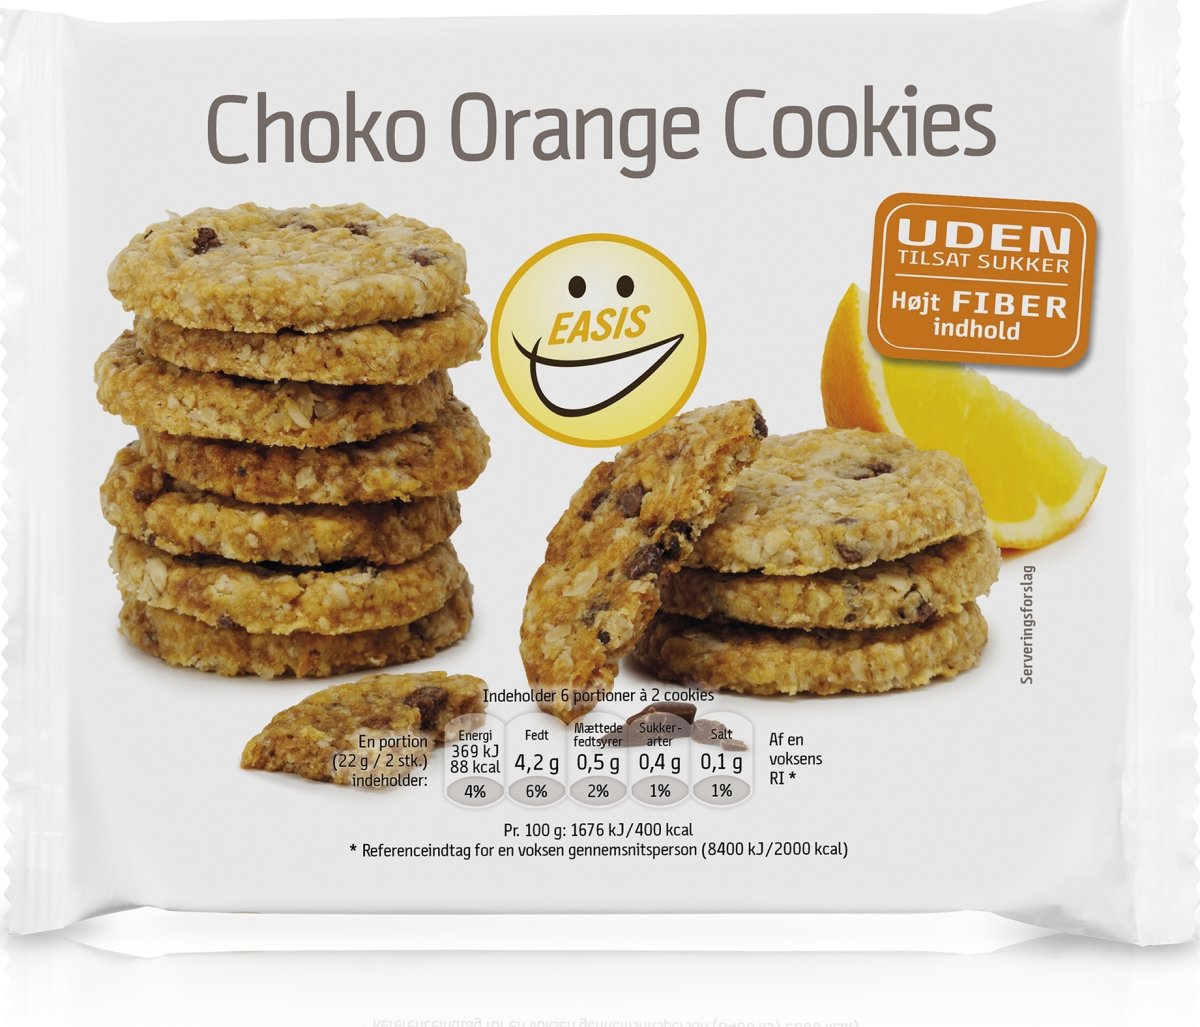 EASIS Choko Orange Cookies, uden sukker - se mere her! Lomax A/S